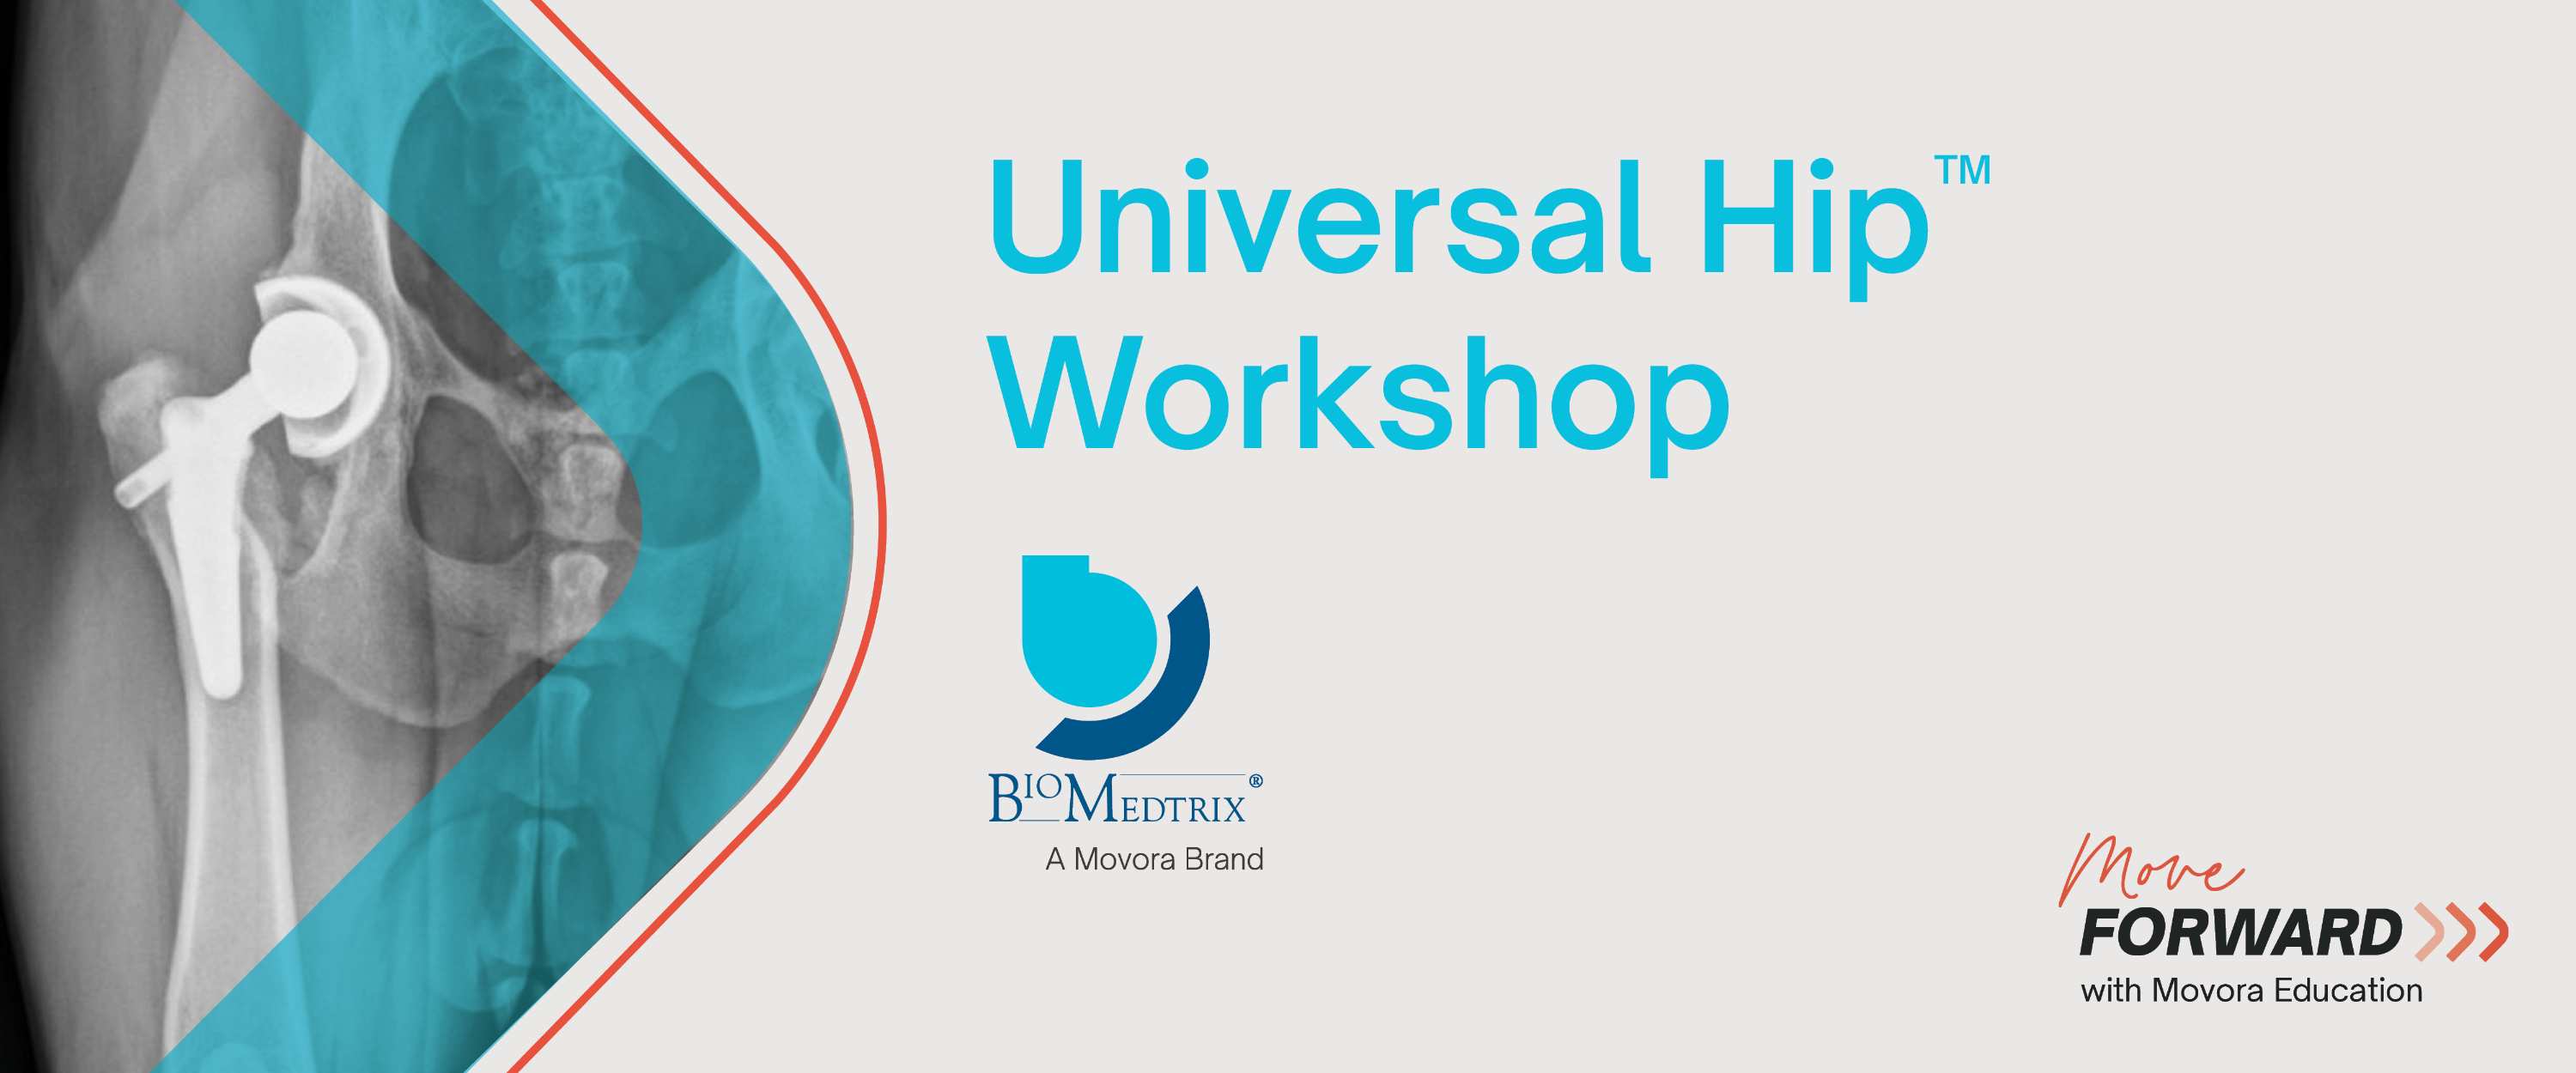 Universal Hip Workshop banner